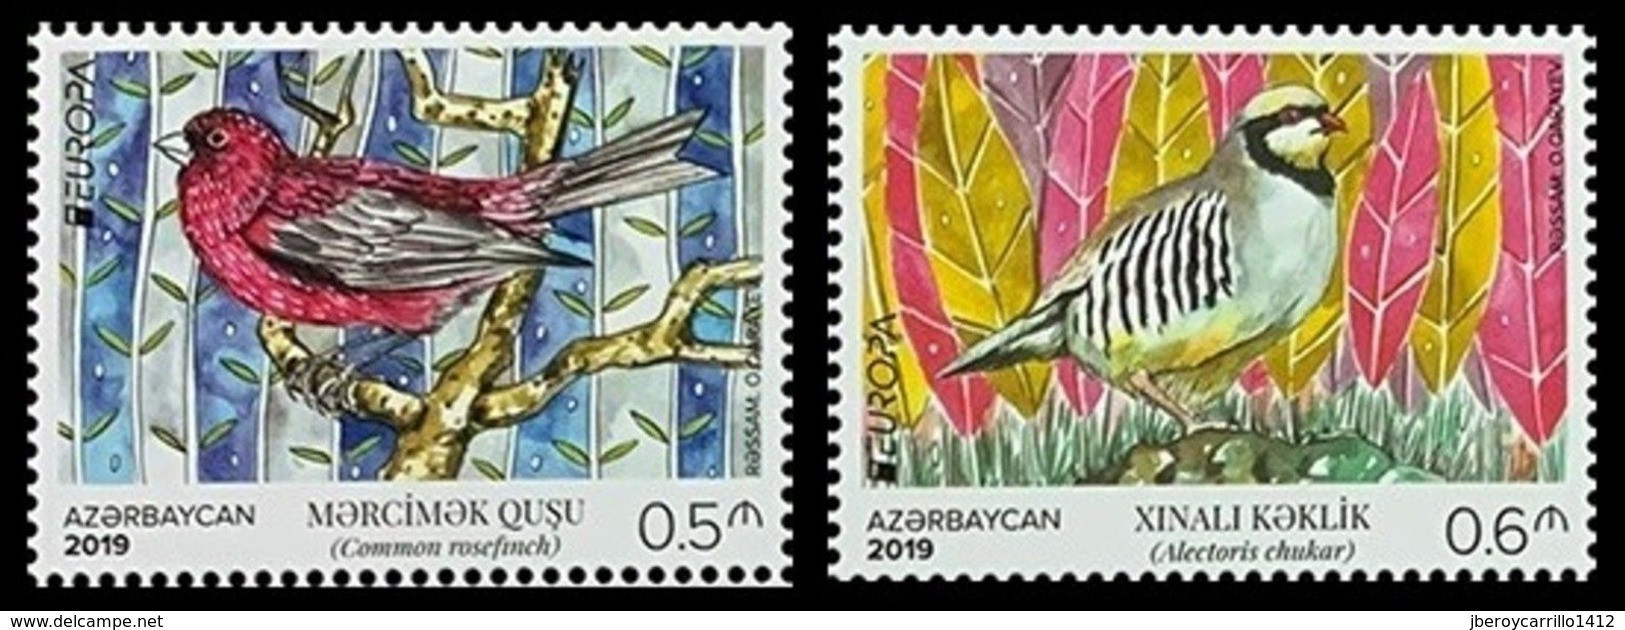 AZERBAIJAN /AZERBAYCAN /ASERBAIDSCHAN  -EUROPA 2019- NATIONAL BIRDS.-"AVES- BIRDS -VÖGEL- OISEAUX"- SERIE De 2 V. - 2019